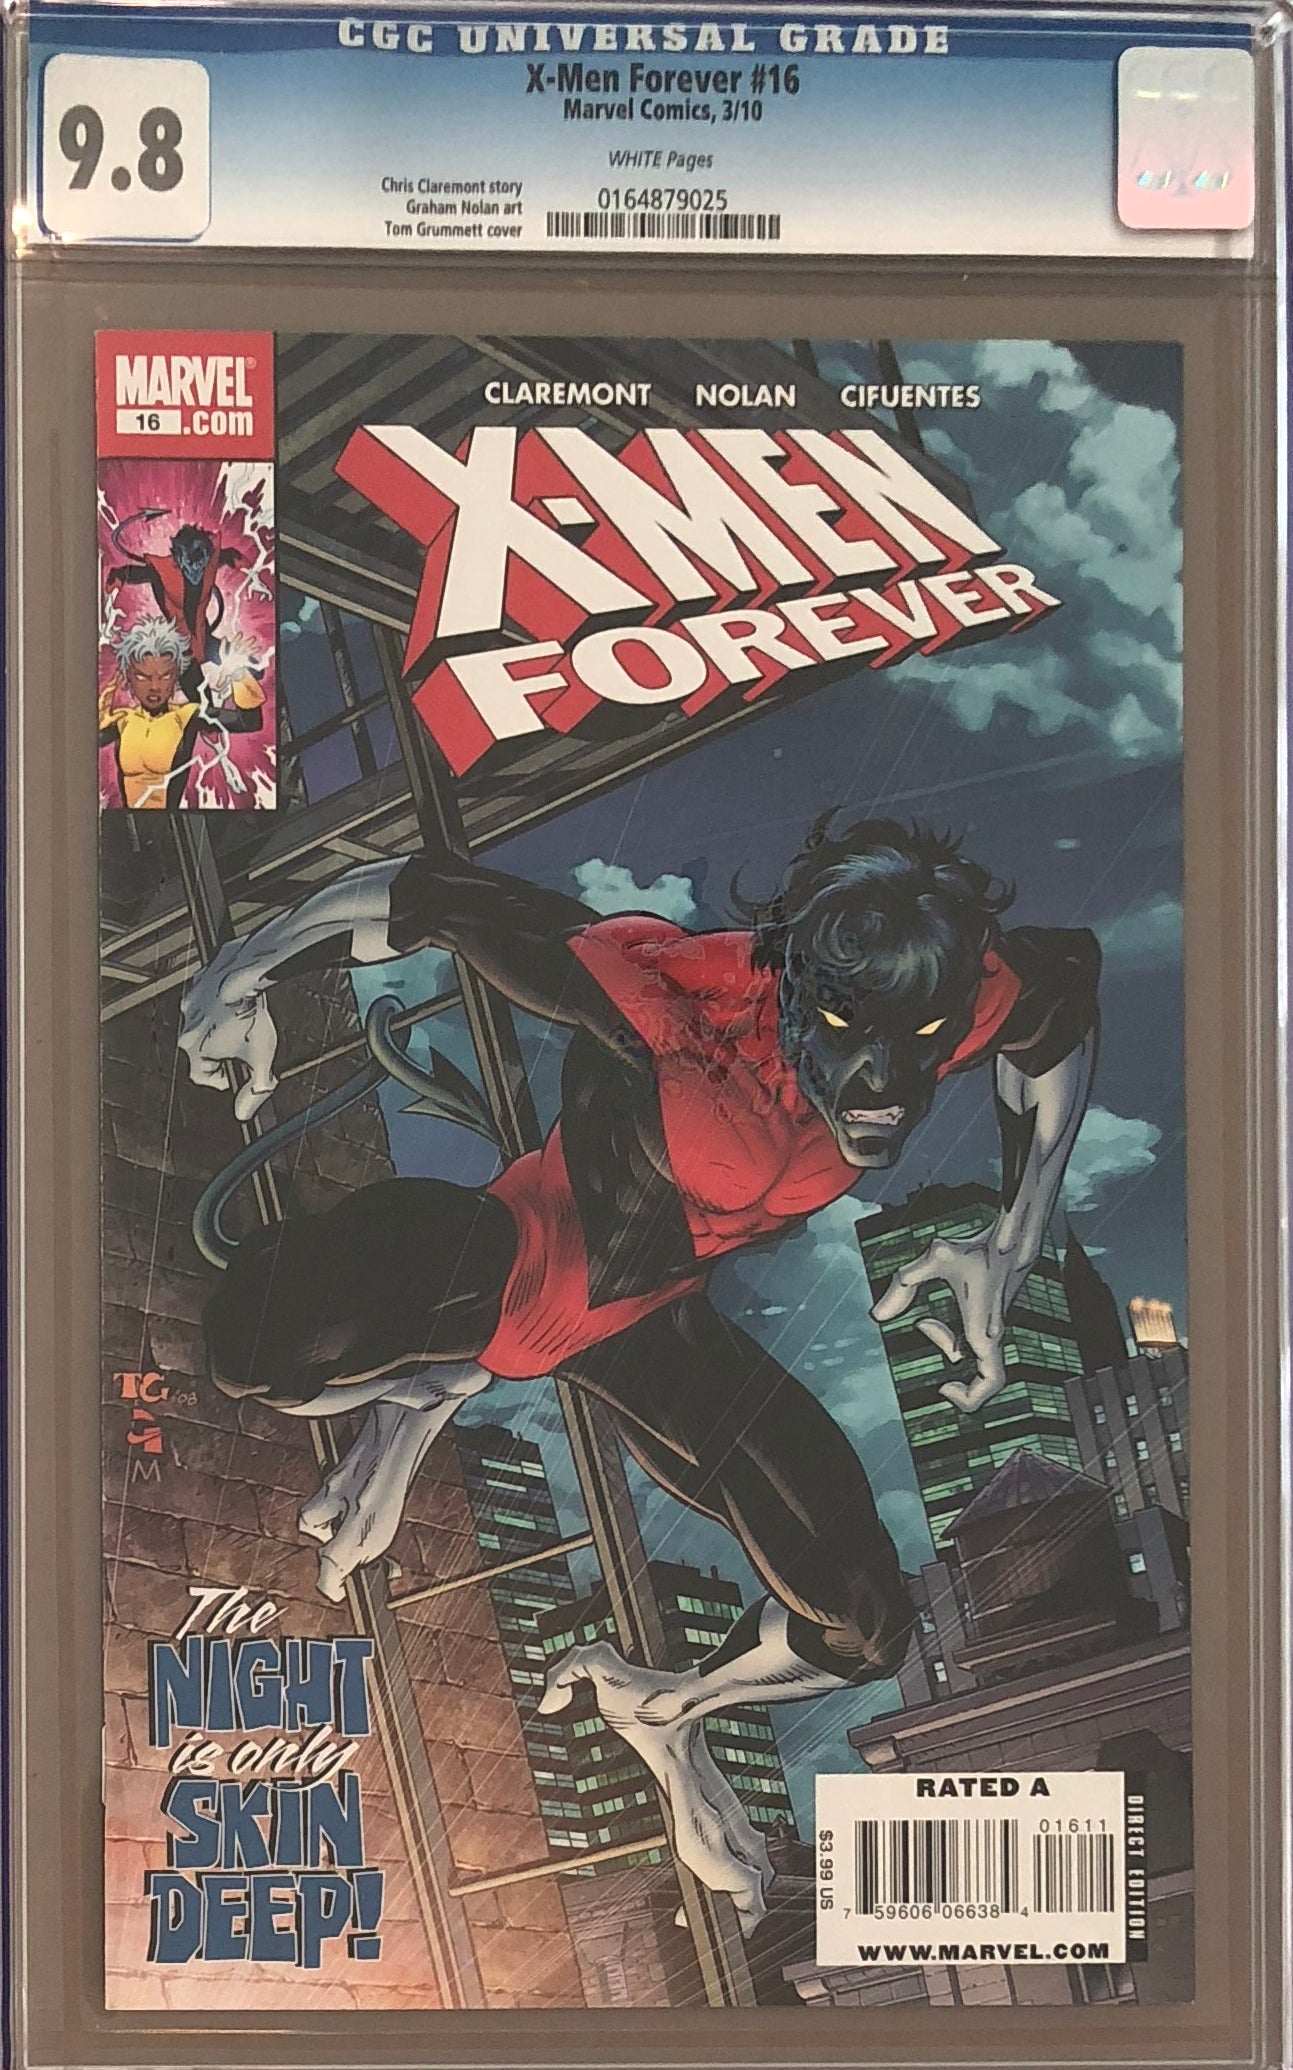 X-Men Forever #16 CGC 9.8